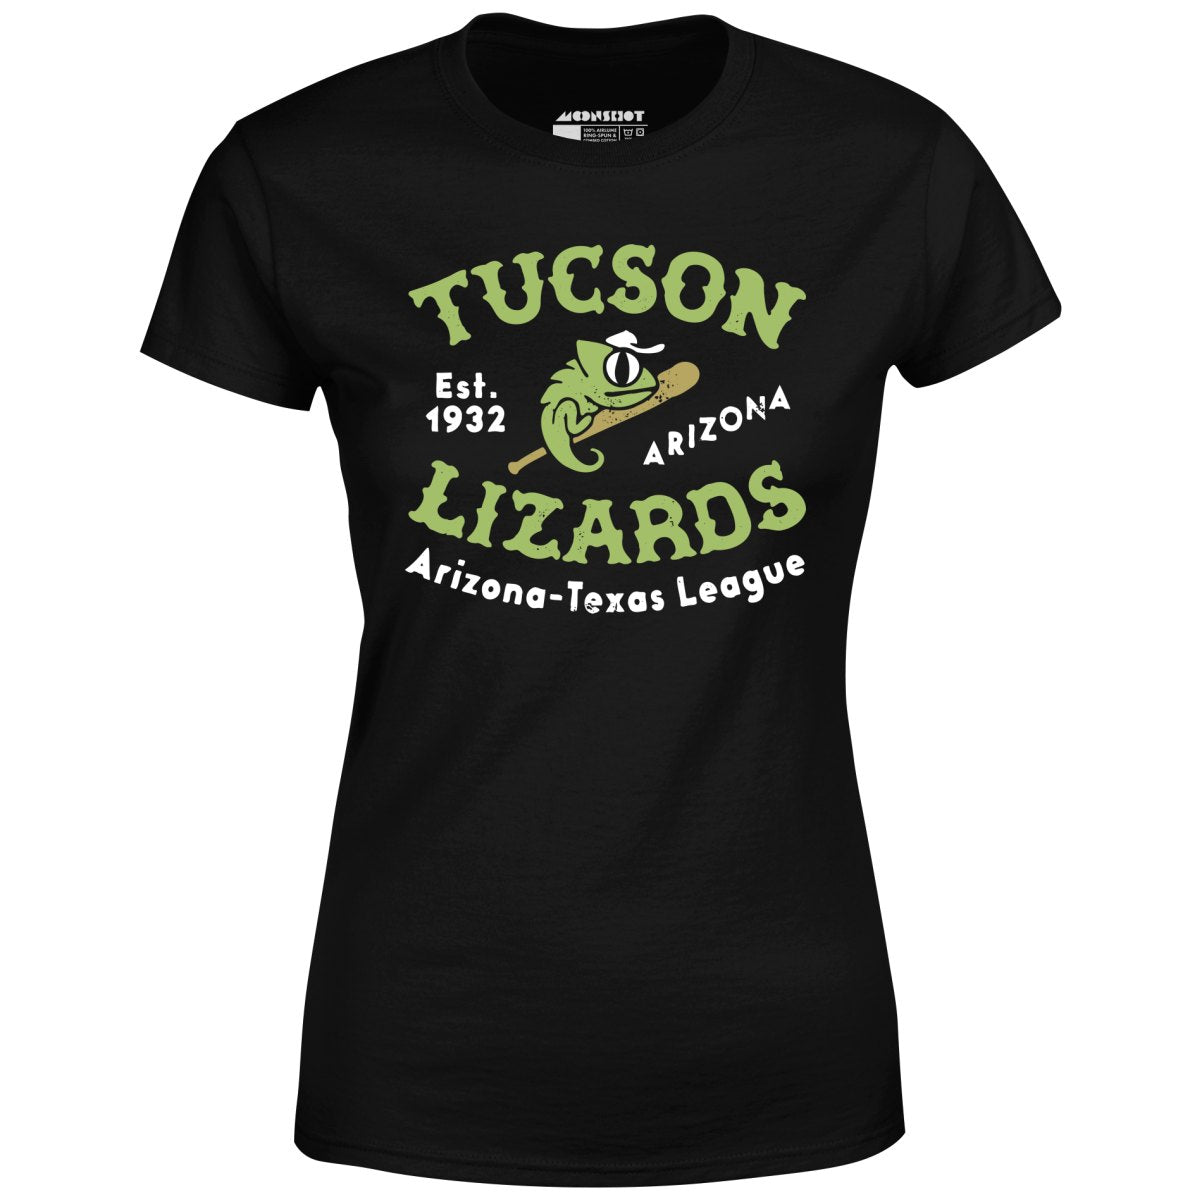 Tucson Lizards - Arizona - Vintage Defunct Baseball Teams - Women's T-Shirt